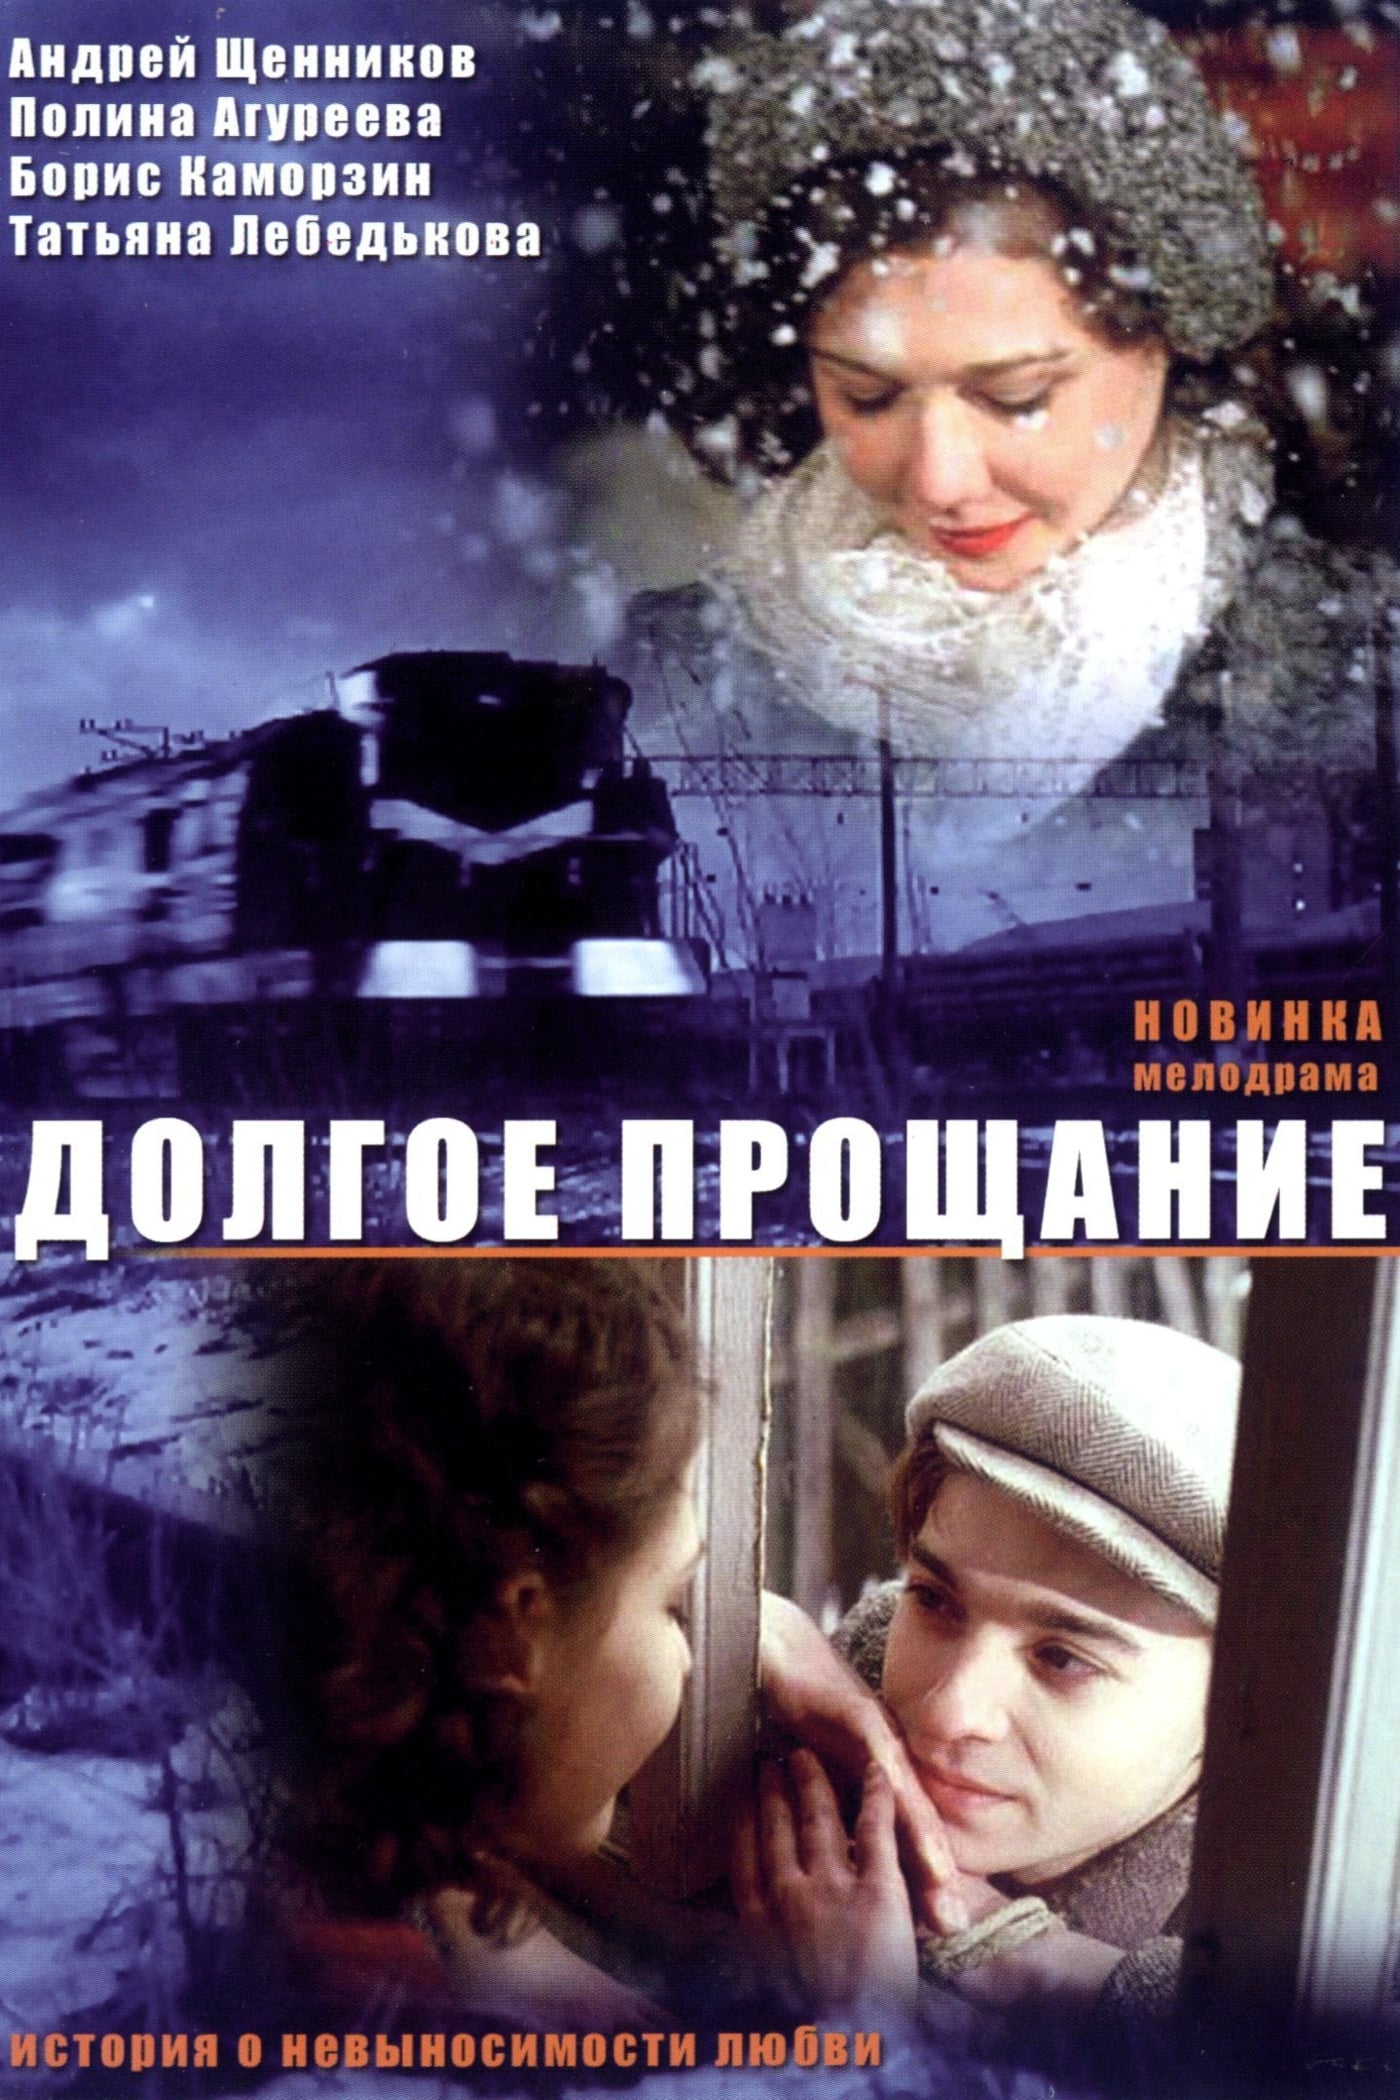 The Long Goodbye (2004)